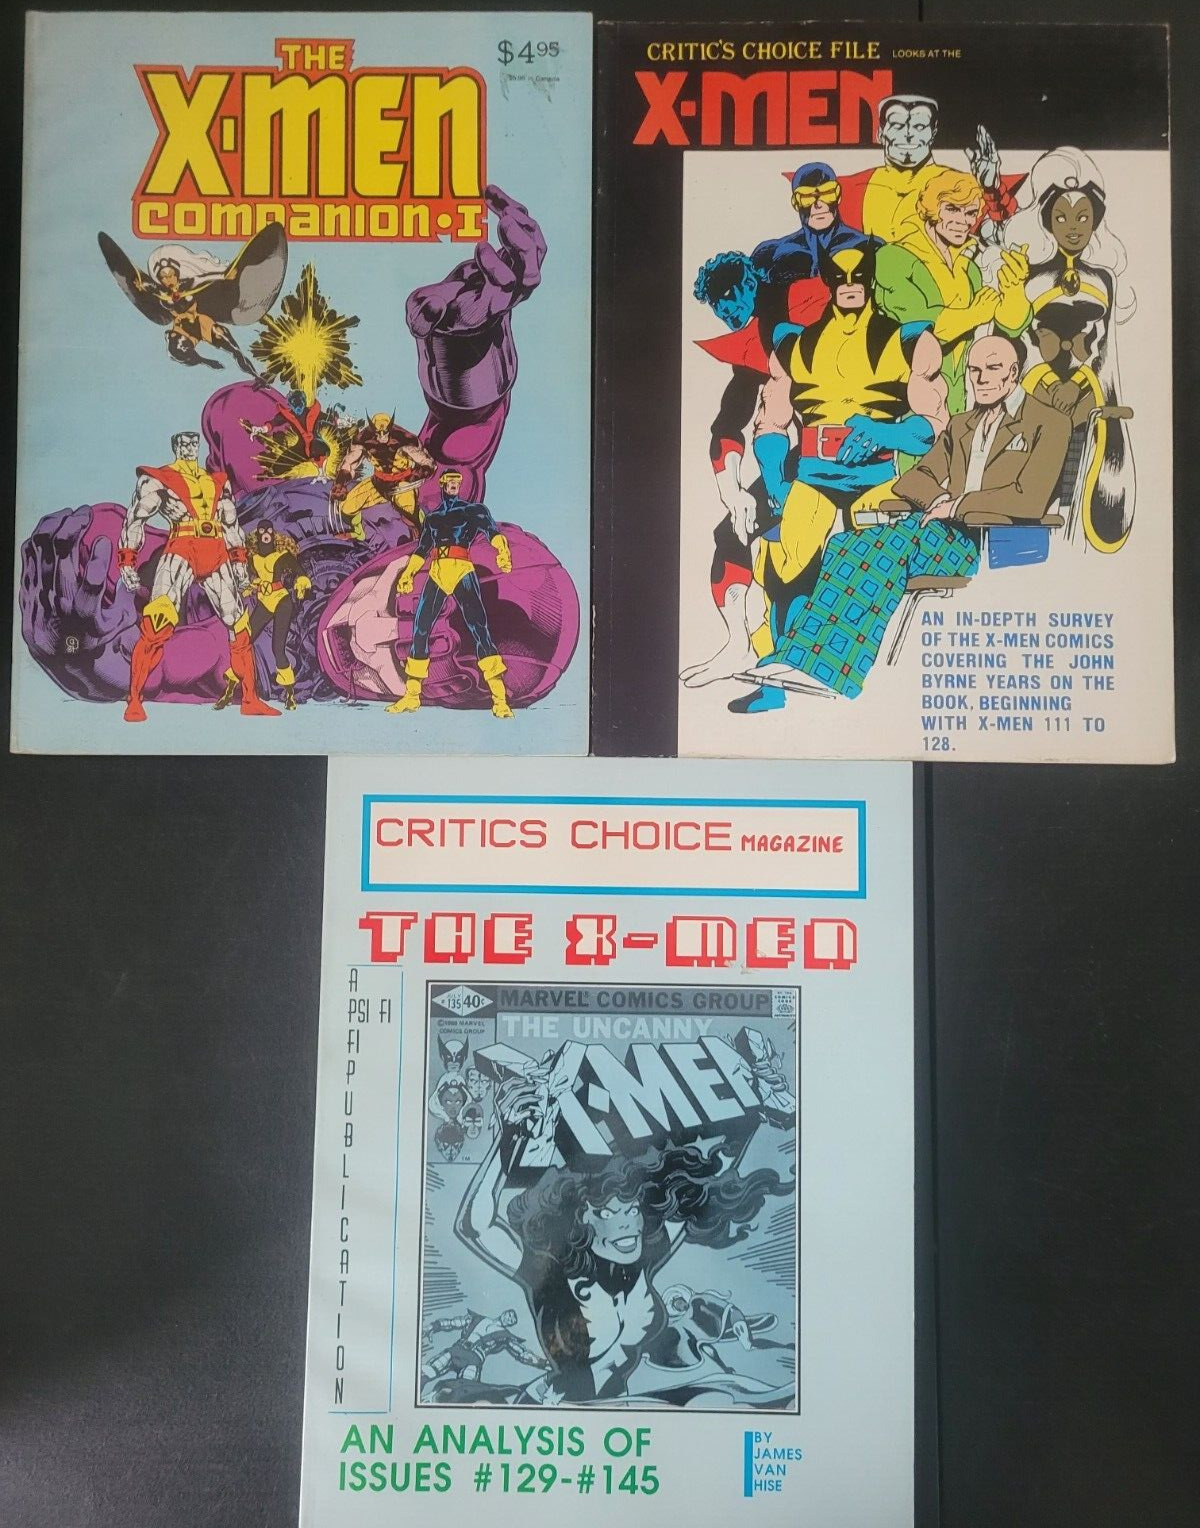 X-MEN CHRONICLES & CRITICS CHOICE FILES SET OF 3 BOOKS 1982 FANTAGRAPHICS MARVEL